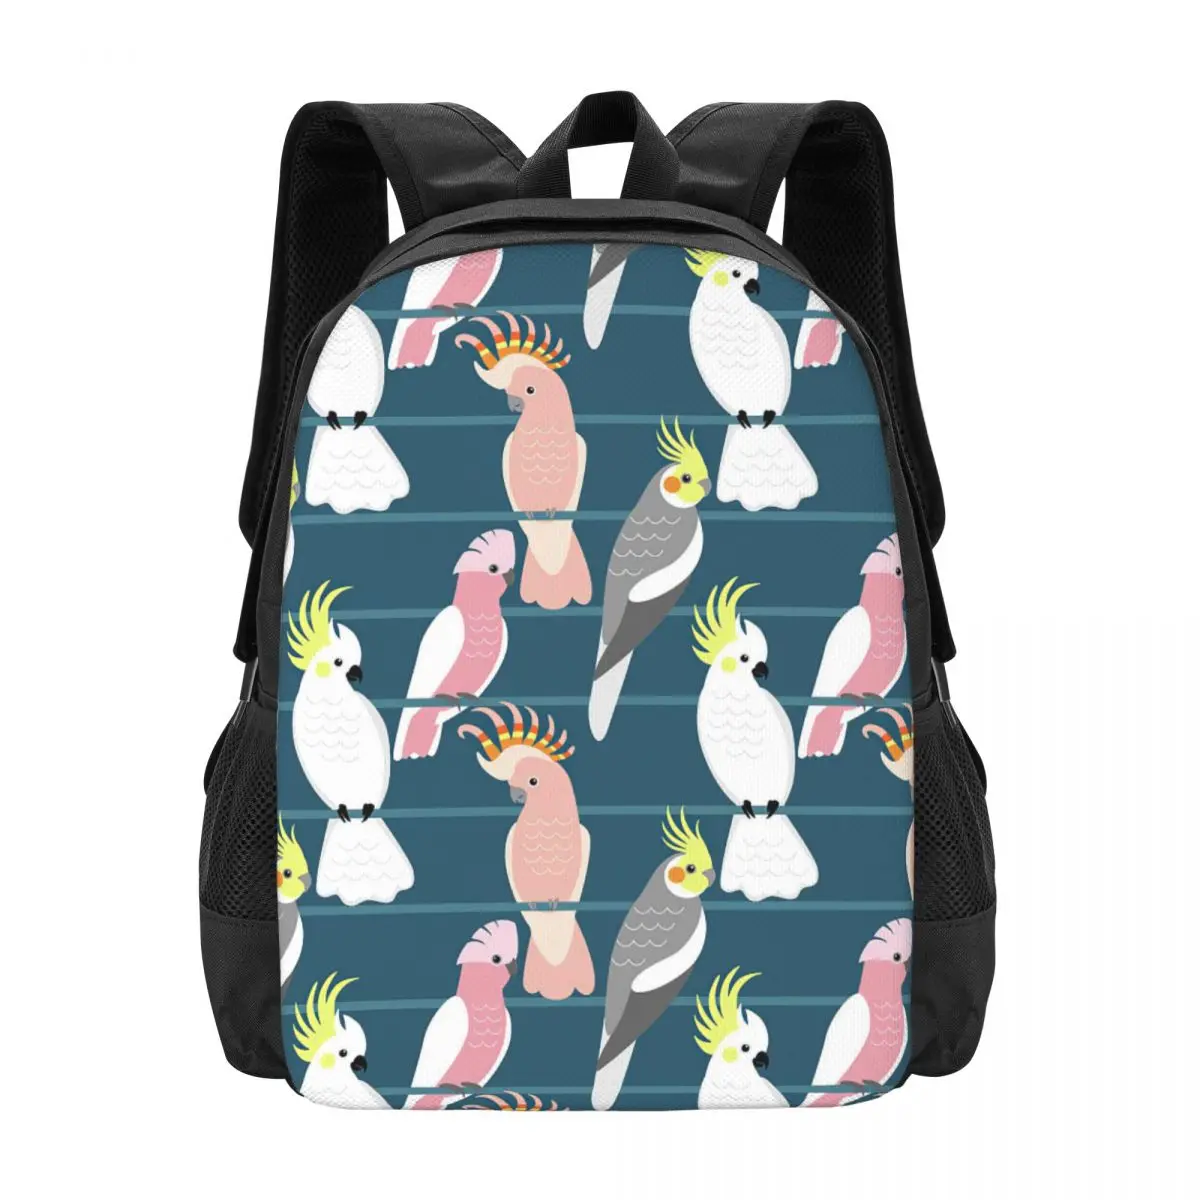 Seamless Pattern With Cute Cartoon Parrots Backpack for Girls Boys Travel RucksackBackpacks for Teenage school bag